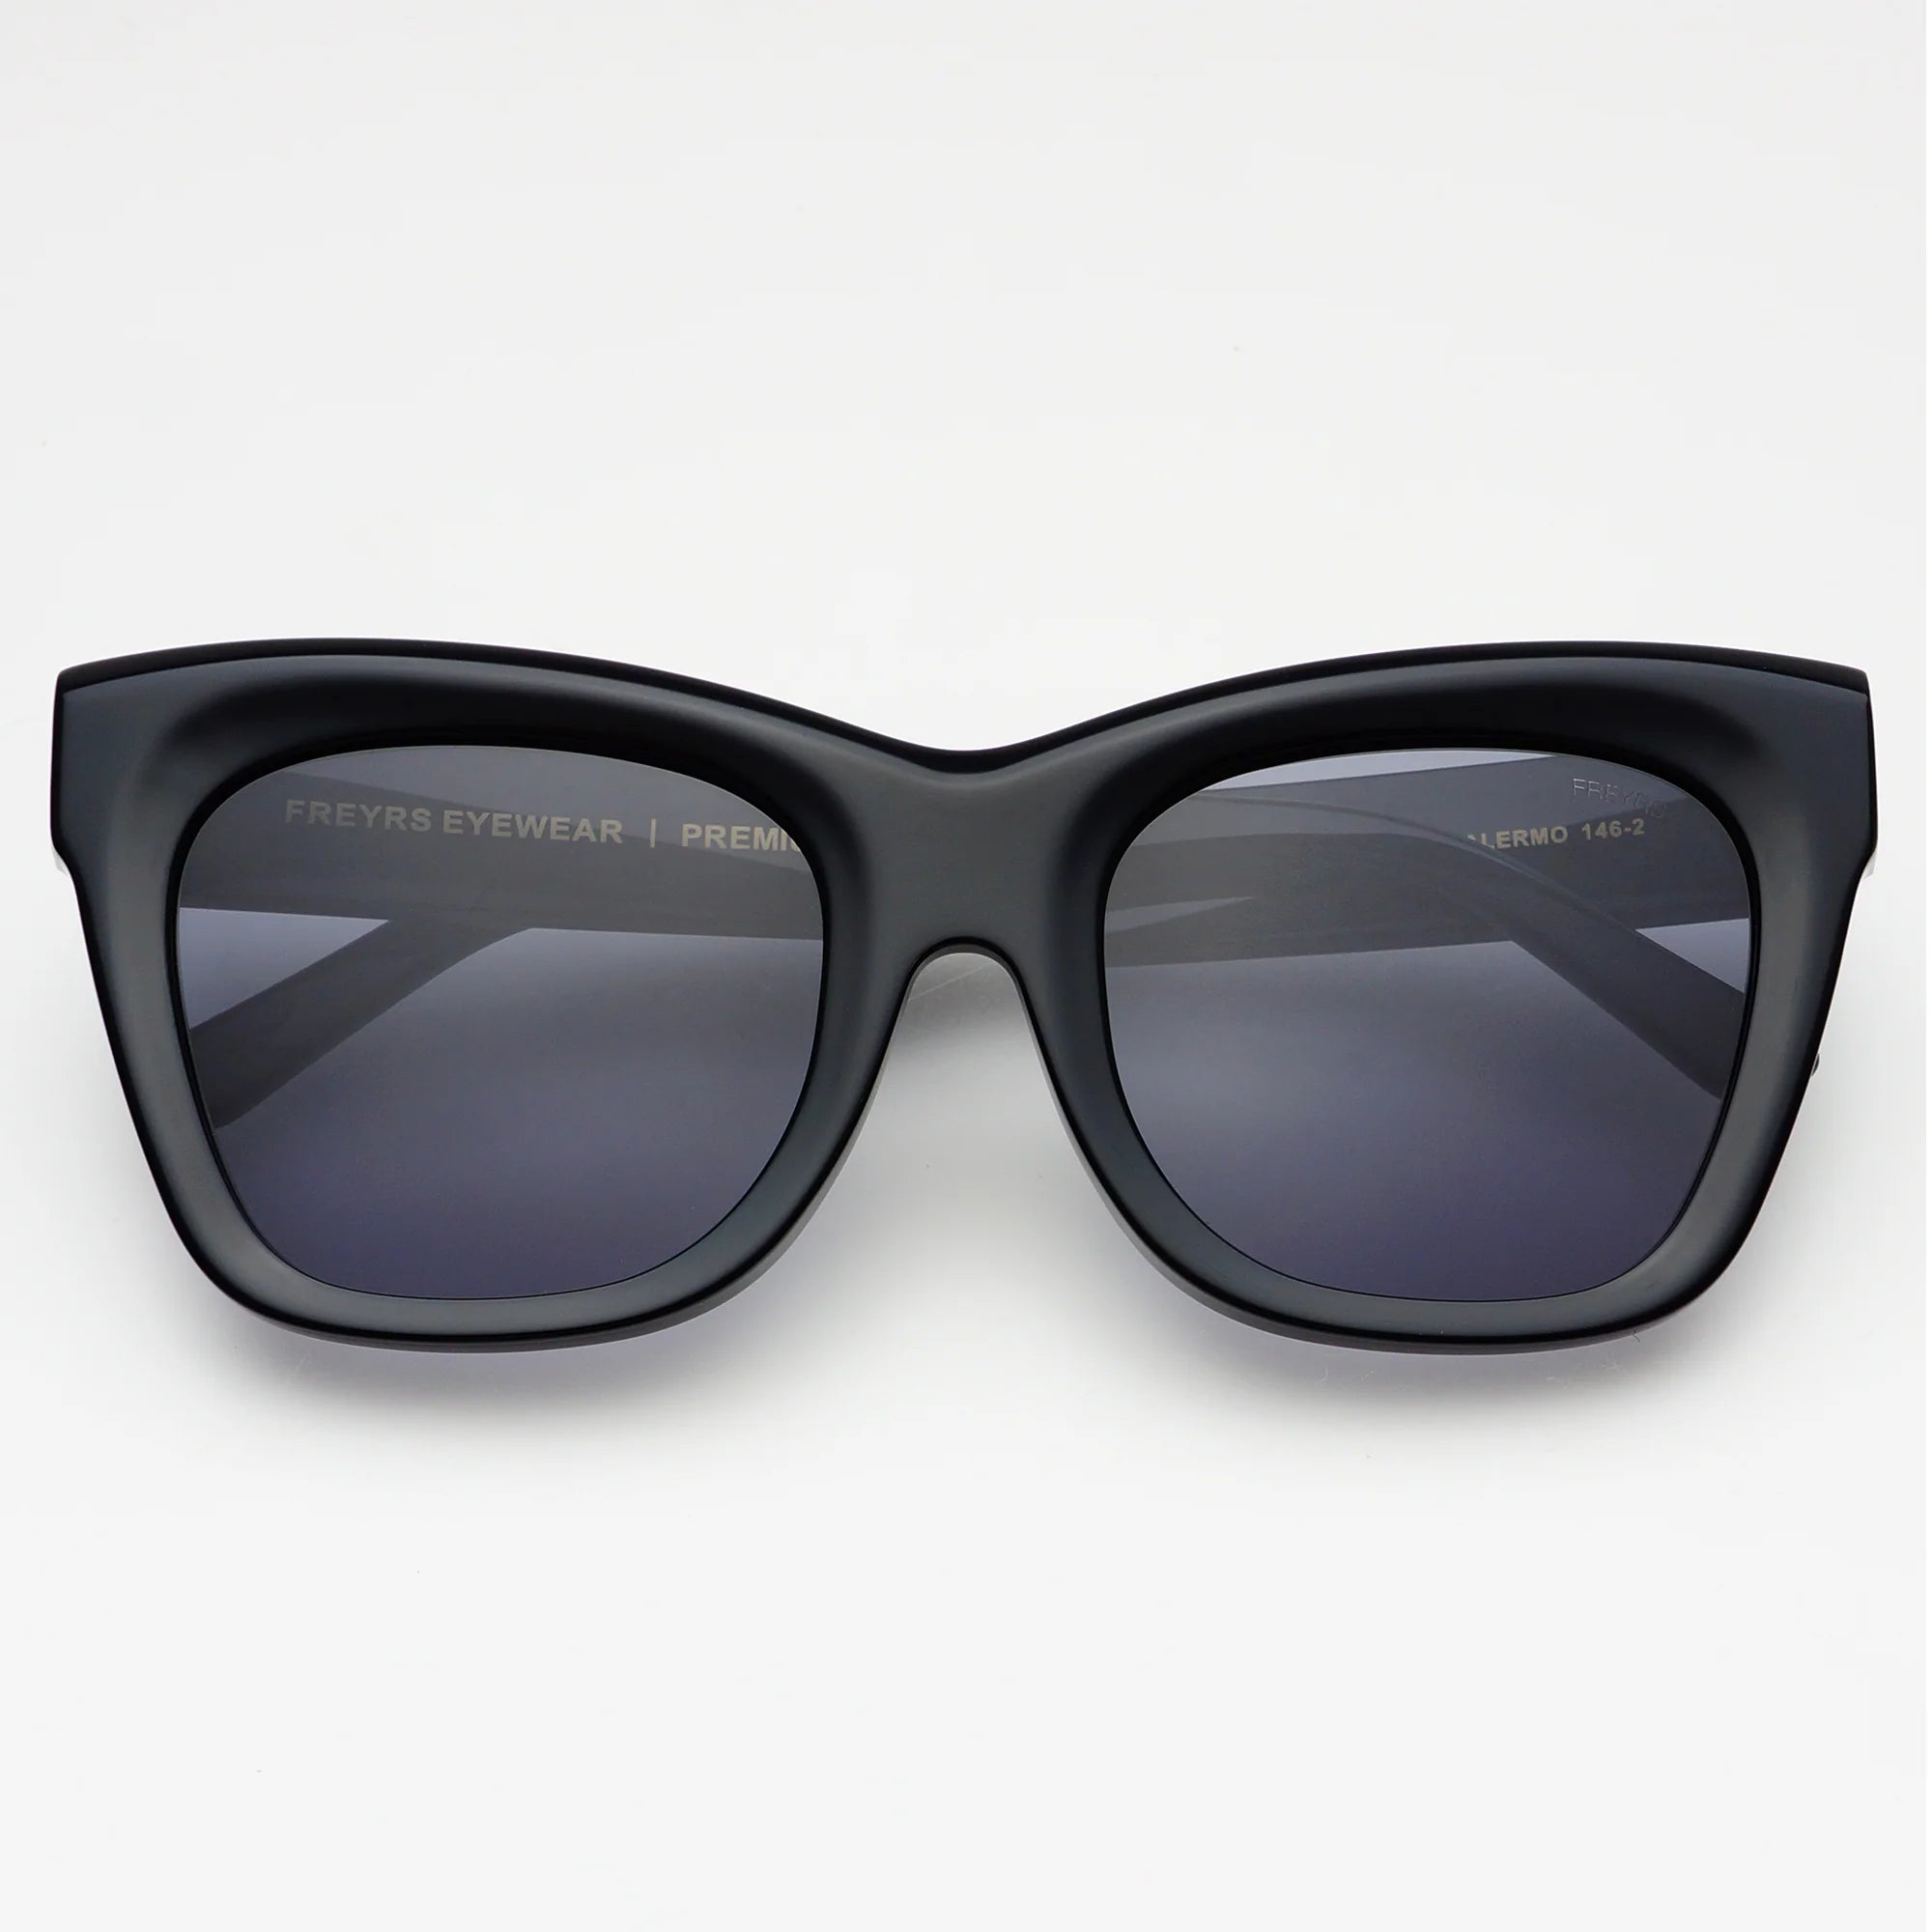 palermo cat eye freyrs sunglasses